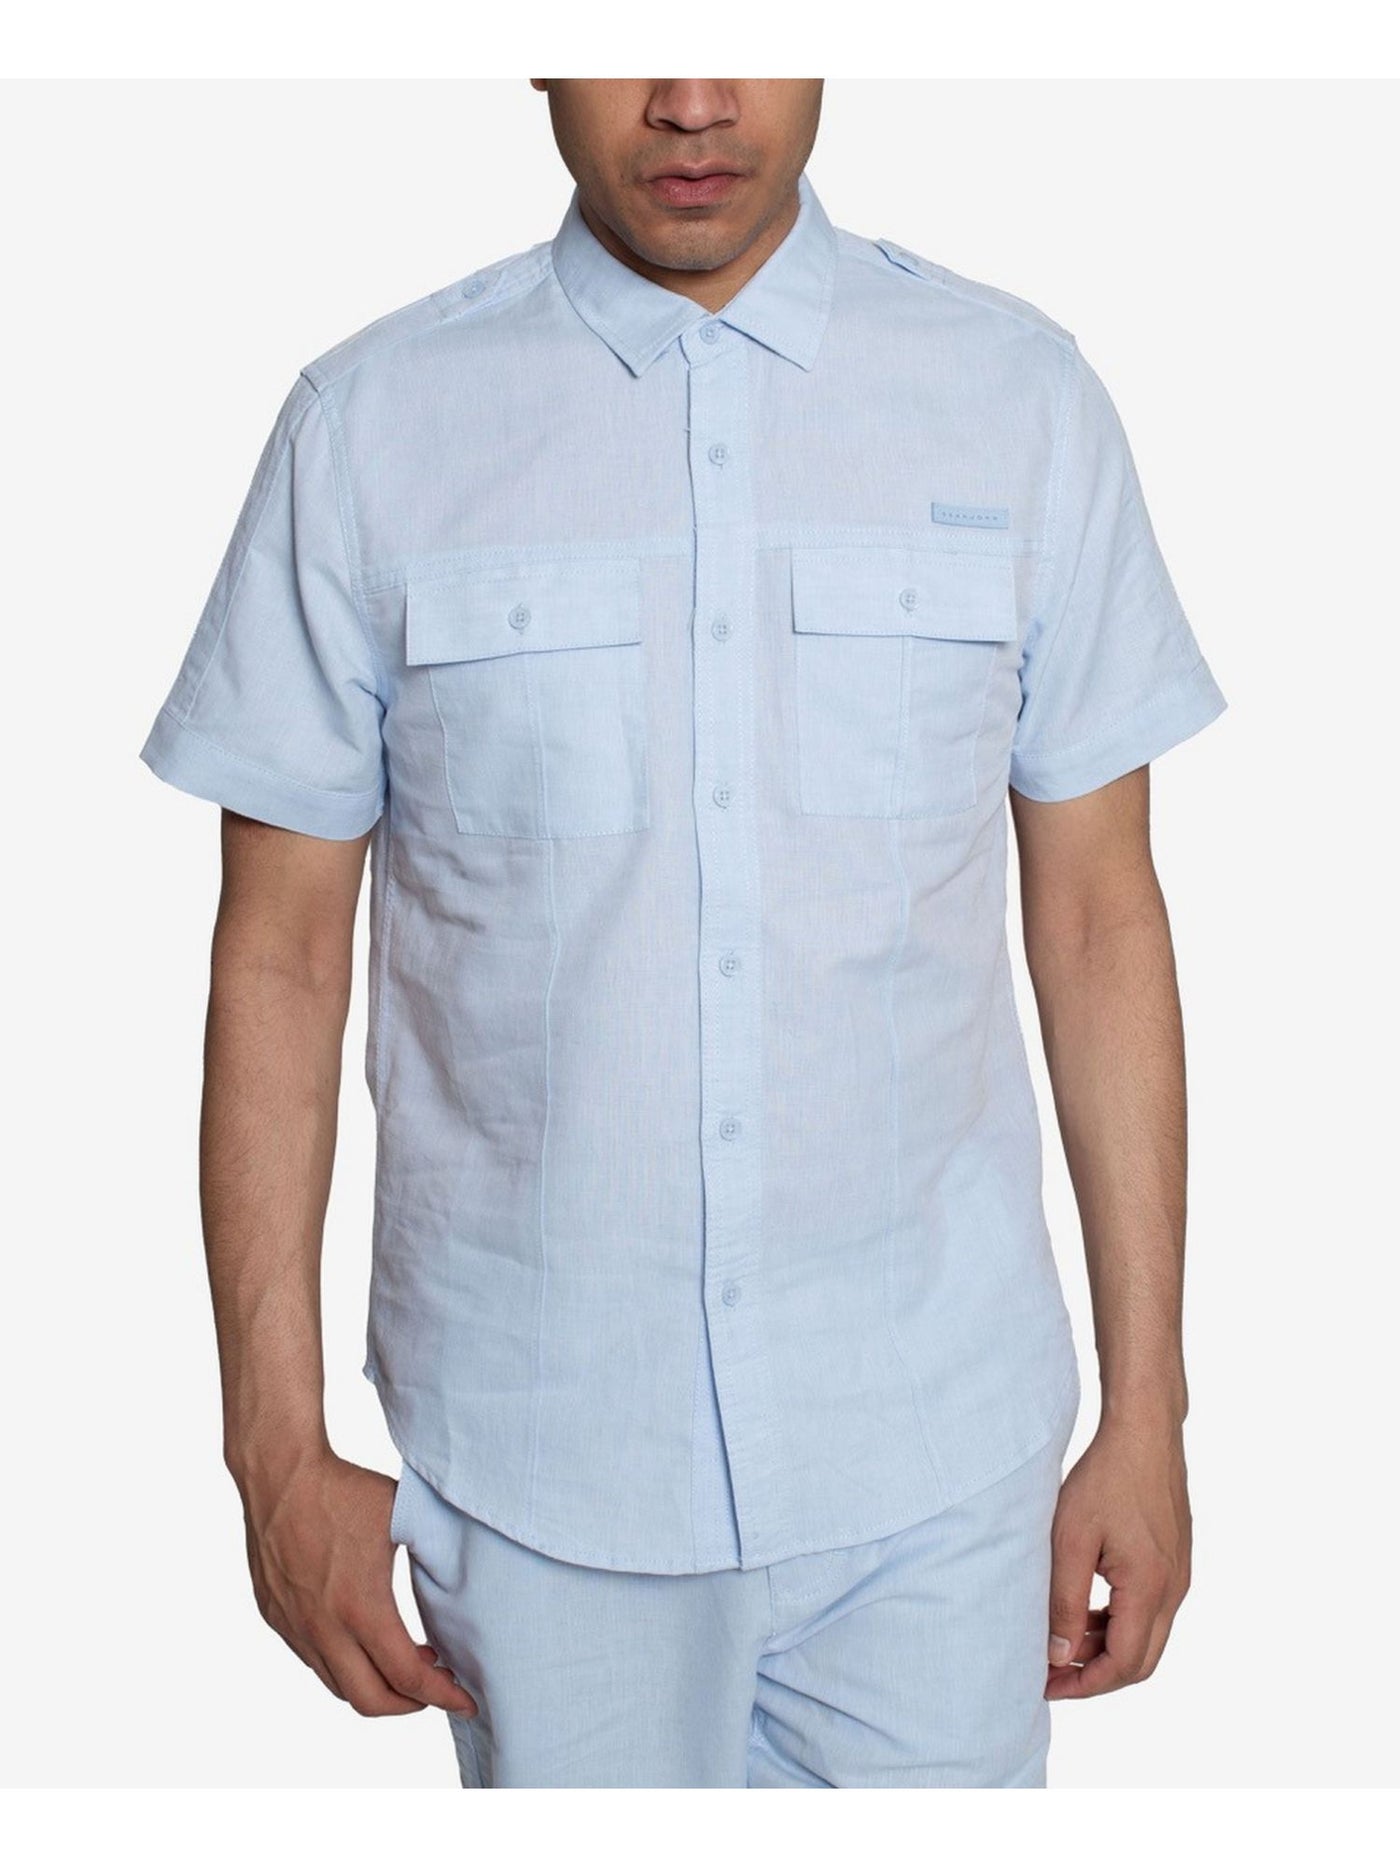 SEANJOHN Mens Light Blue Short Sleeve Point Collar Classic Fit Button Down Shirt M